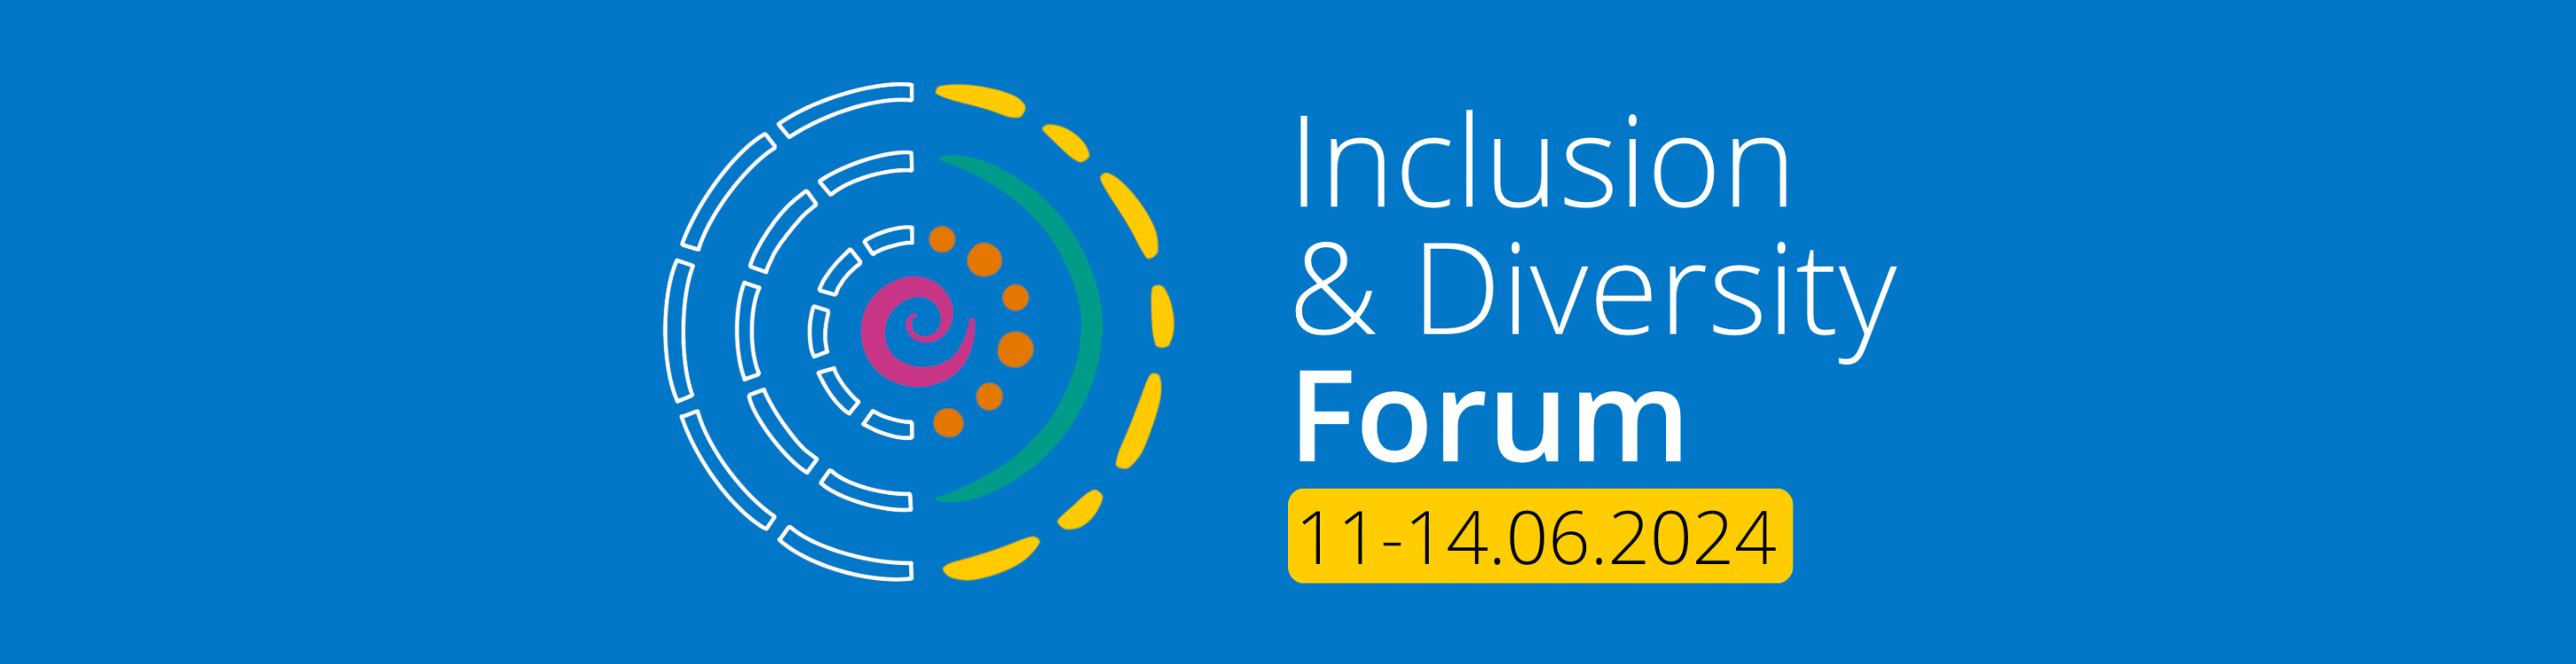 Picture: Inclusion and diversity forum, 11-14 June 2024, Ostend - Belgium